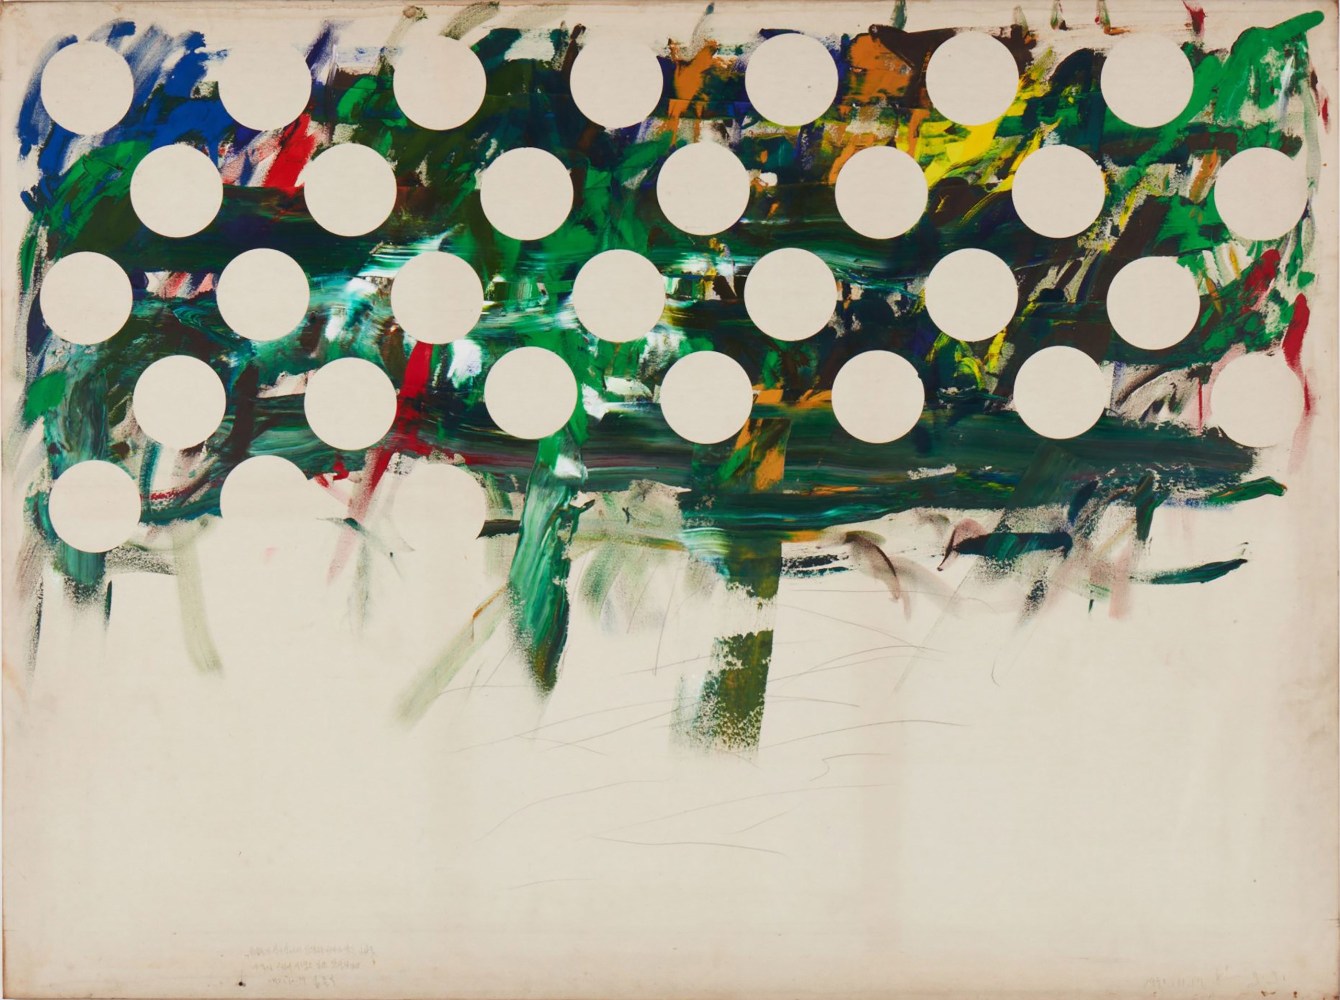 Kim Yong-Ik (b. 1947)

Untitled, 1990-2012

Acrylic on canvas

76.38 x 101.97 inches

194 x 259 cm